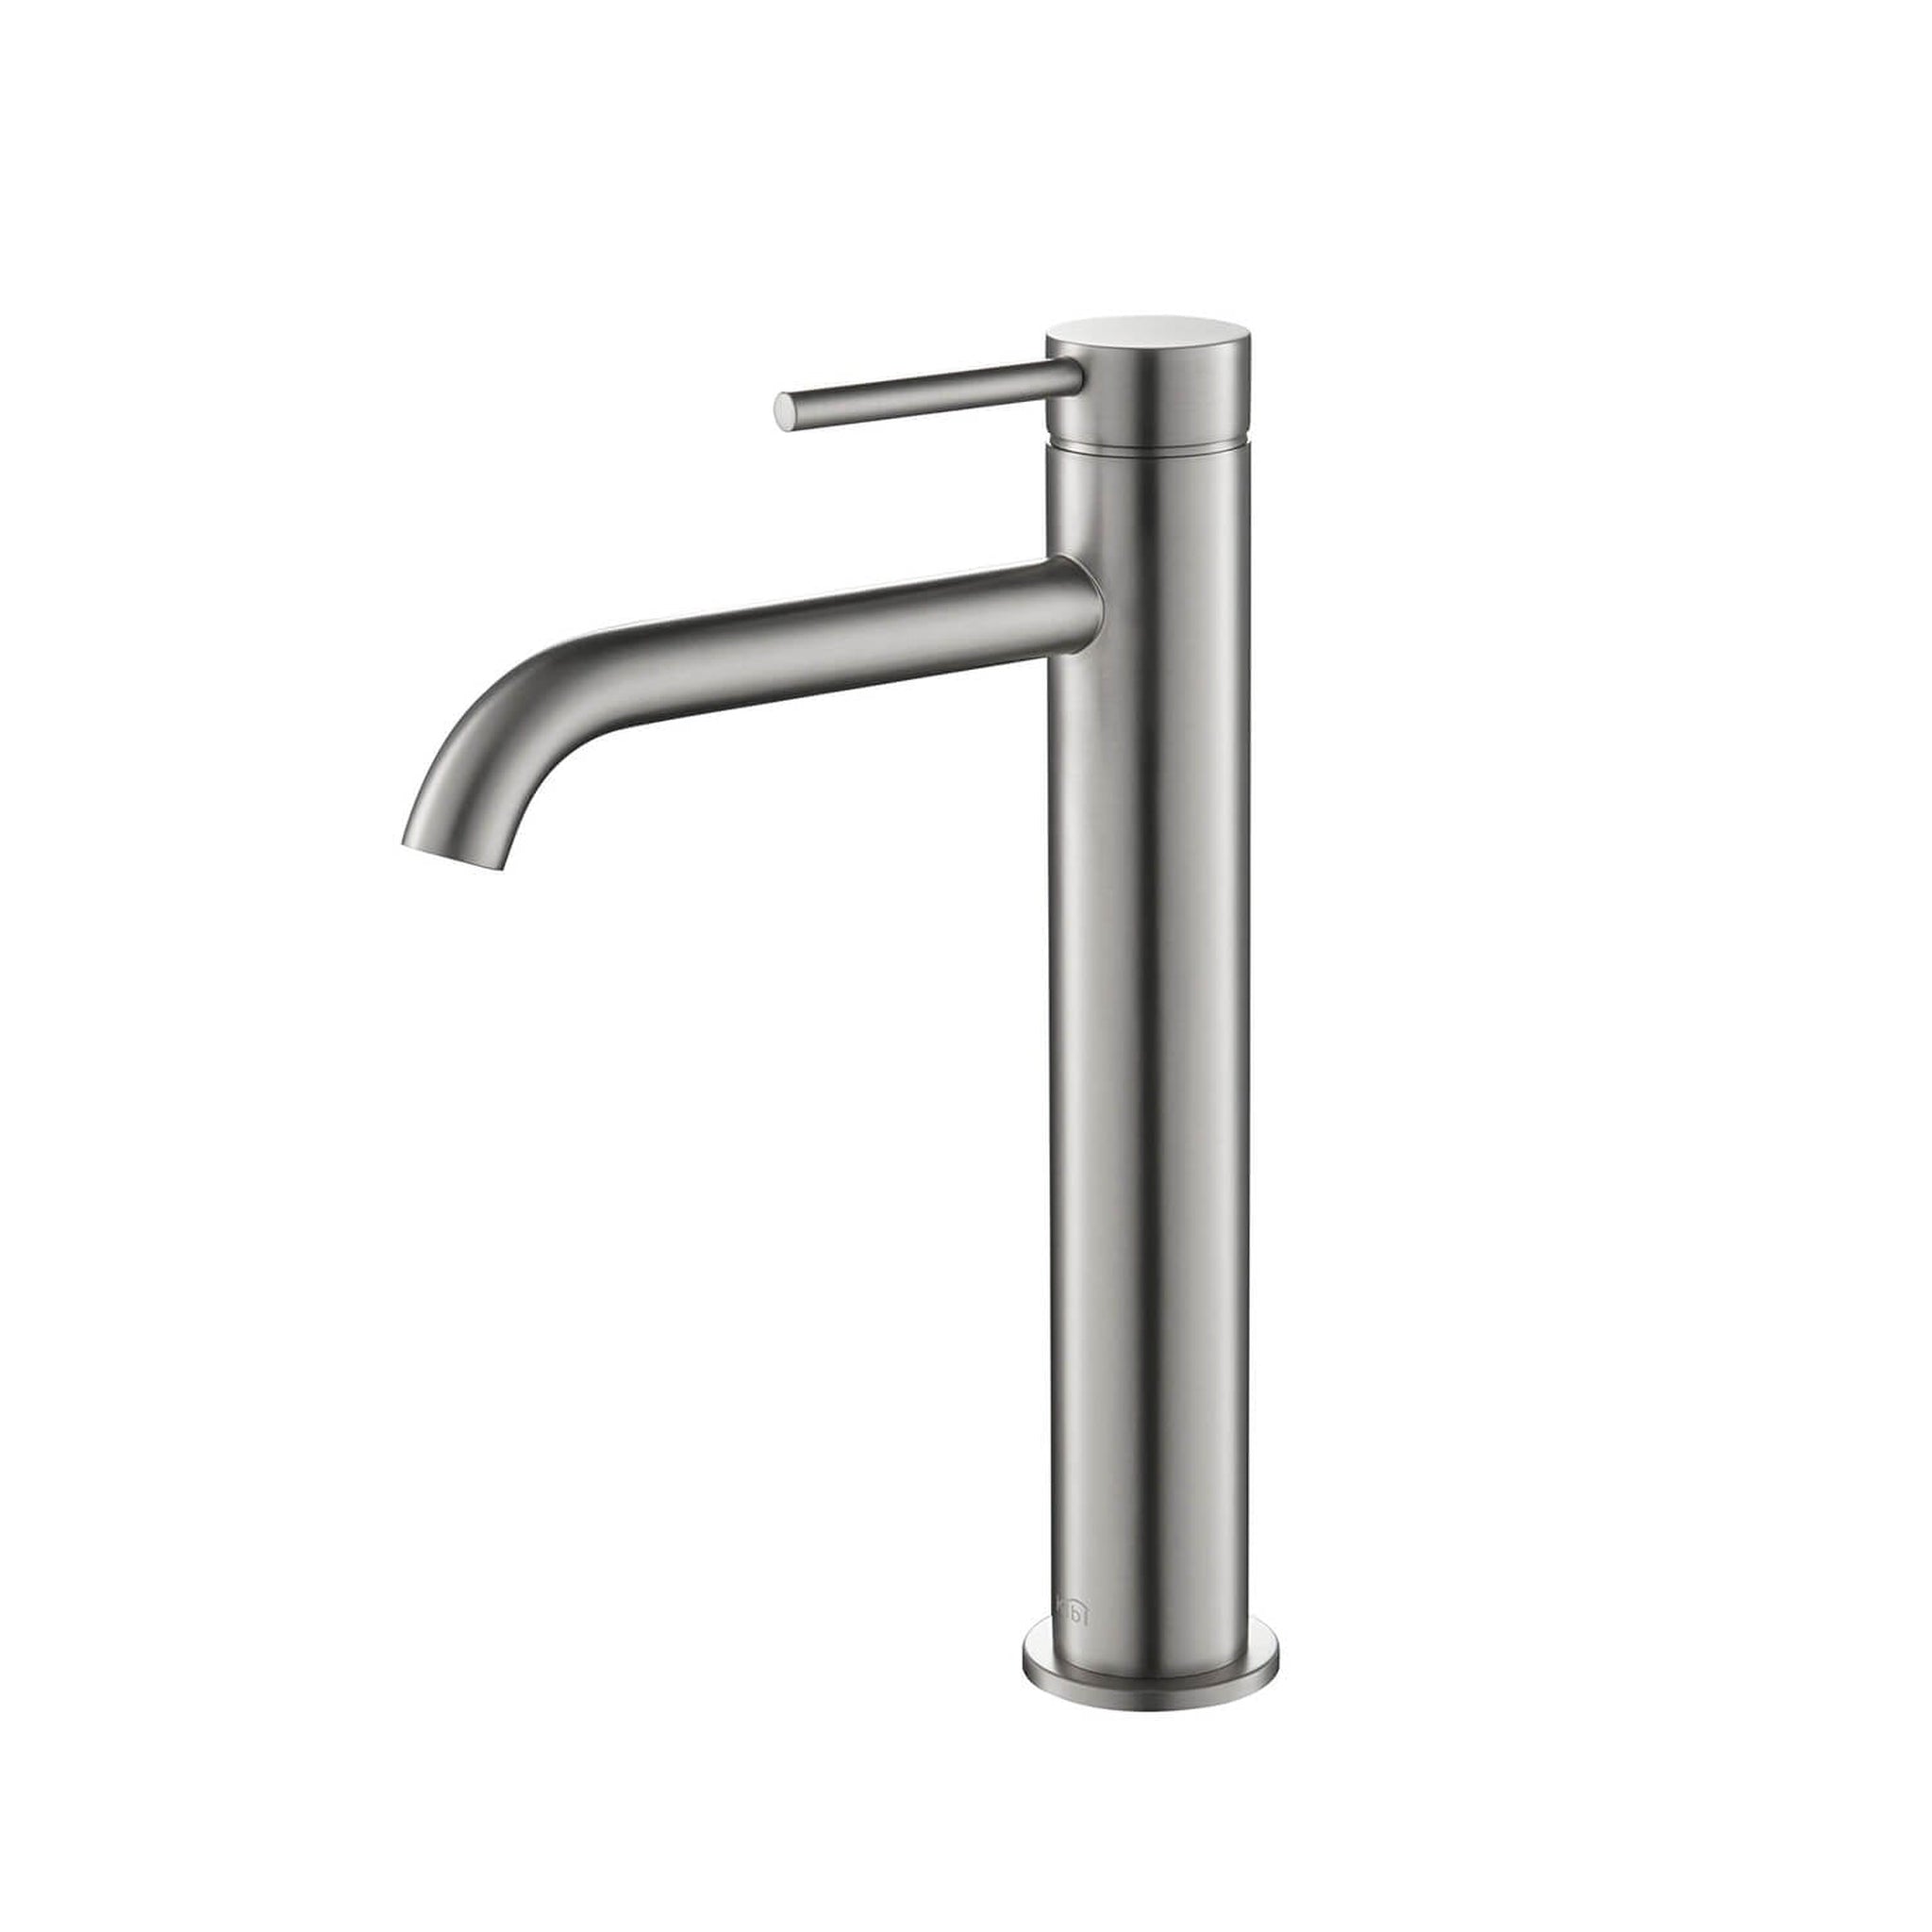 KIBI, KIBI Circular Single Handle Brushed Nickel Solid Brass Bathroom Vessel Sink Faucet